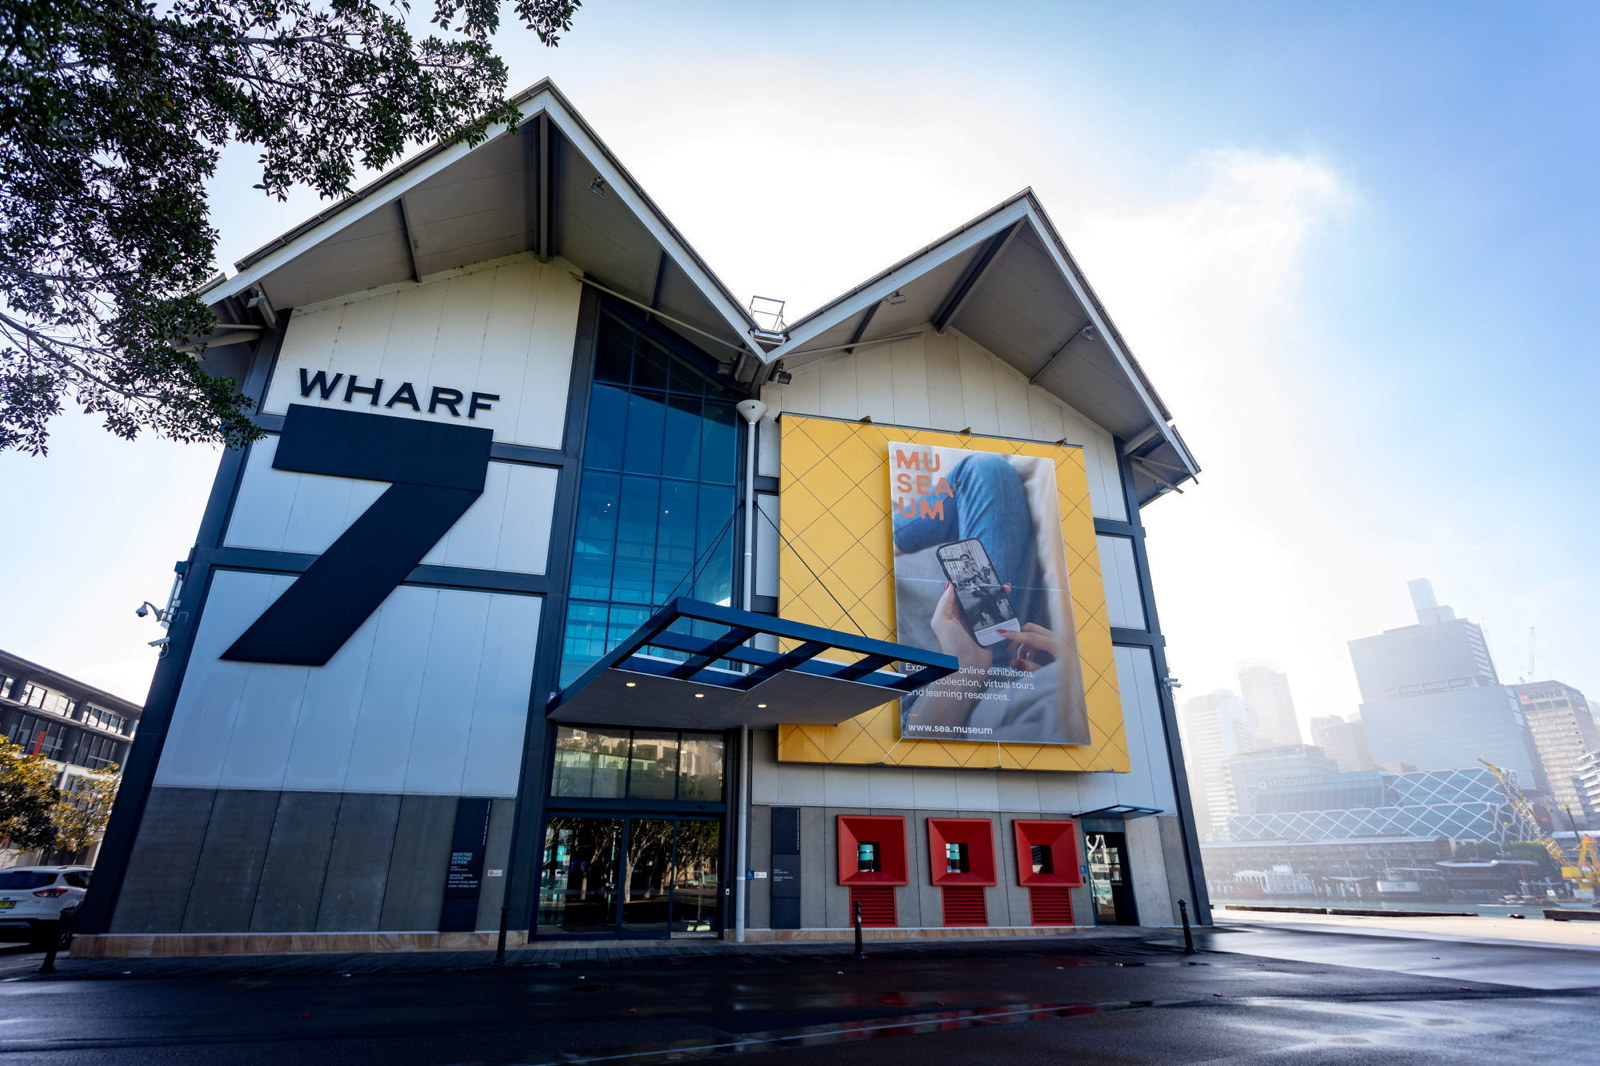 Wharf 7 Heritage Centre, 58 Pirrama Road, Pyrmont, NSW 2009. Sydney Open 2023